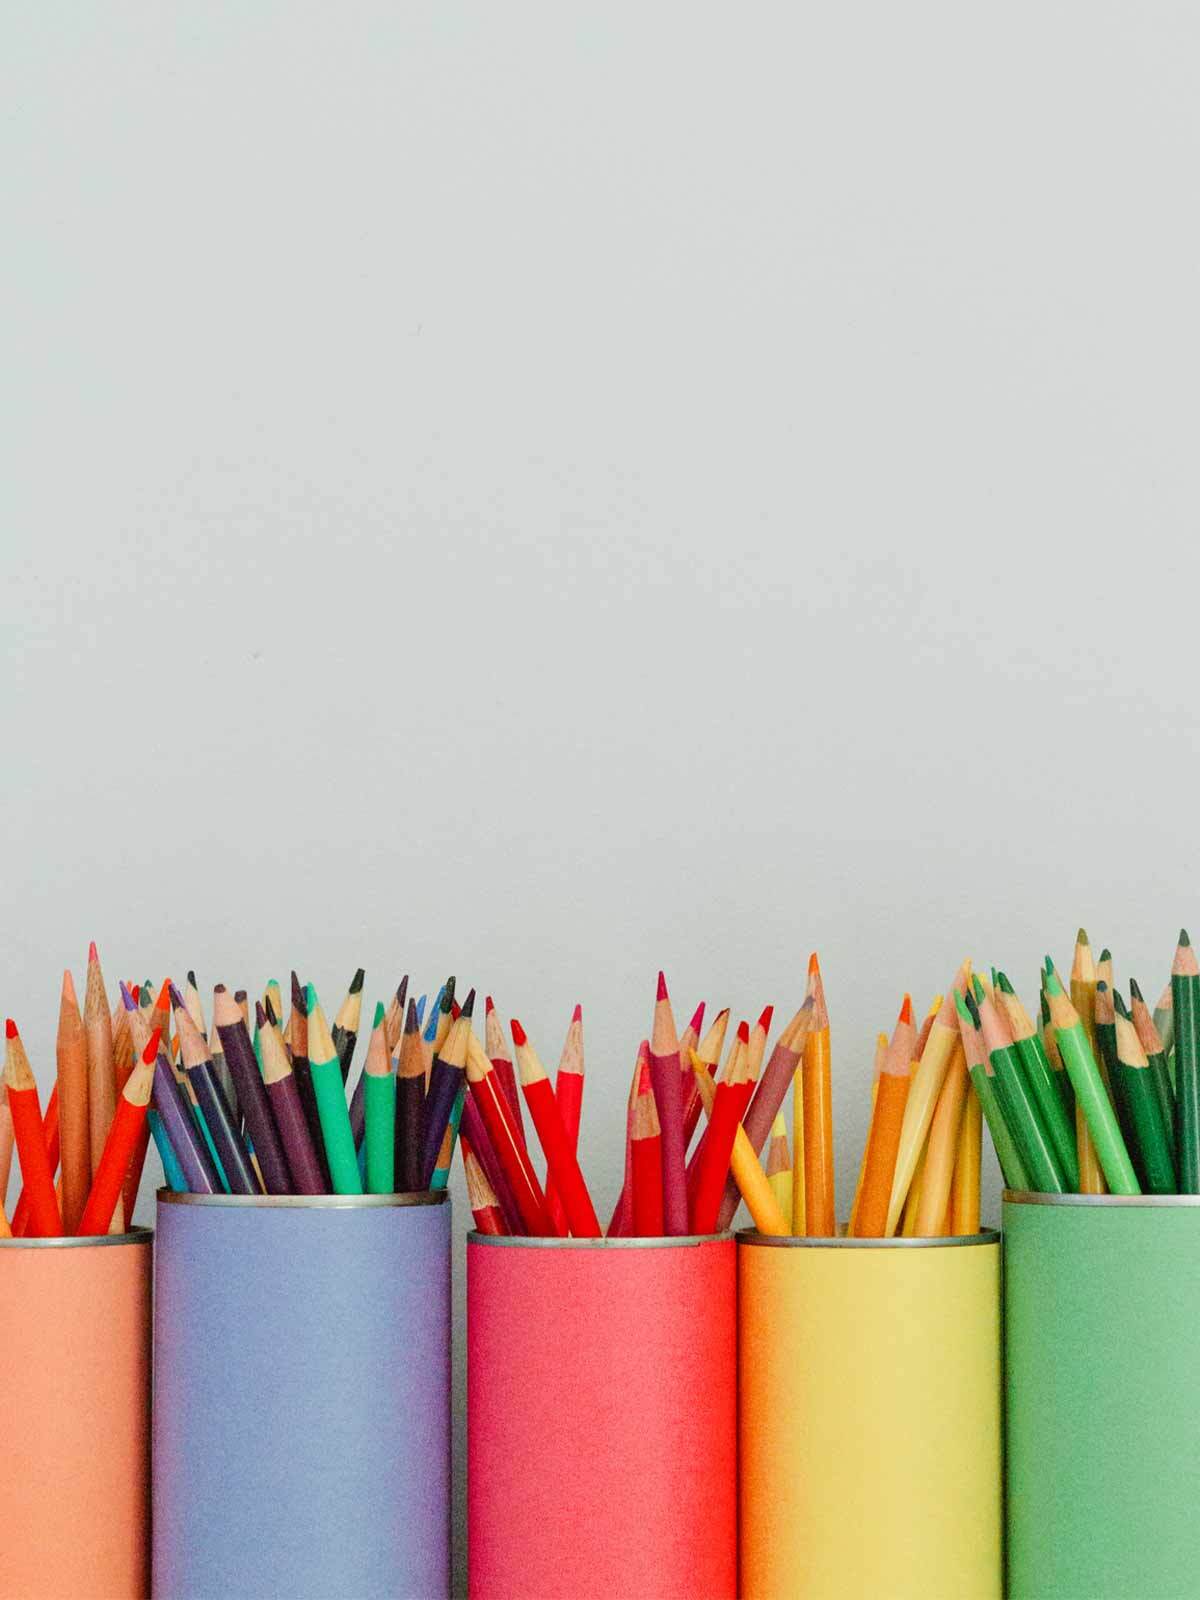 buckets of colored pencils